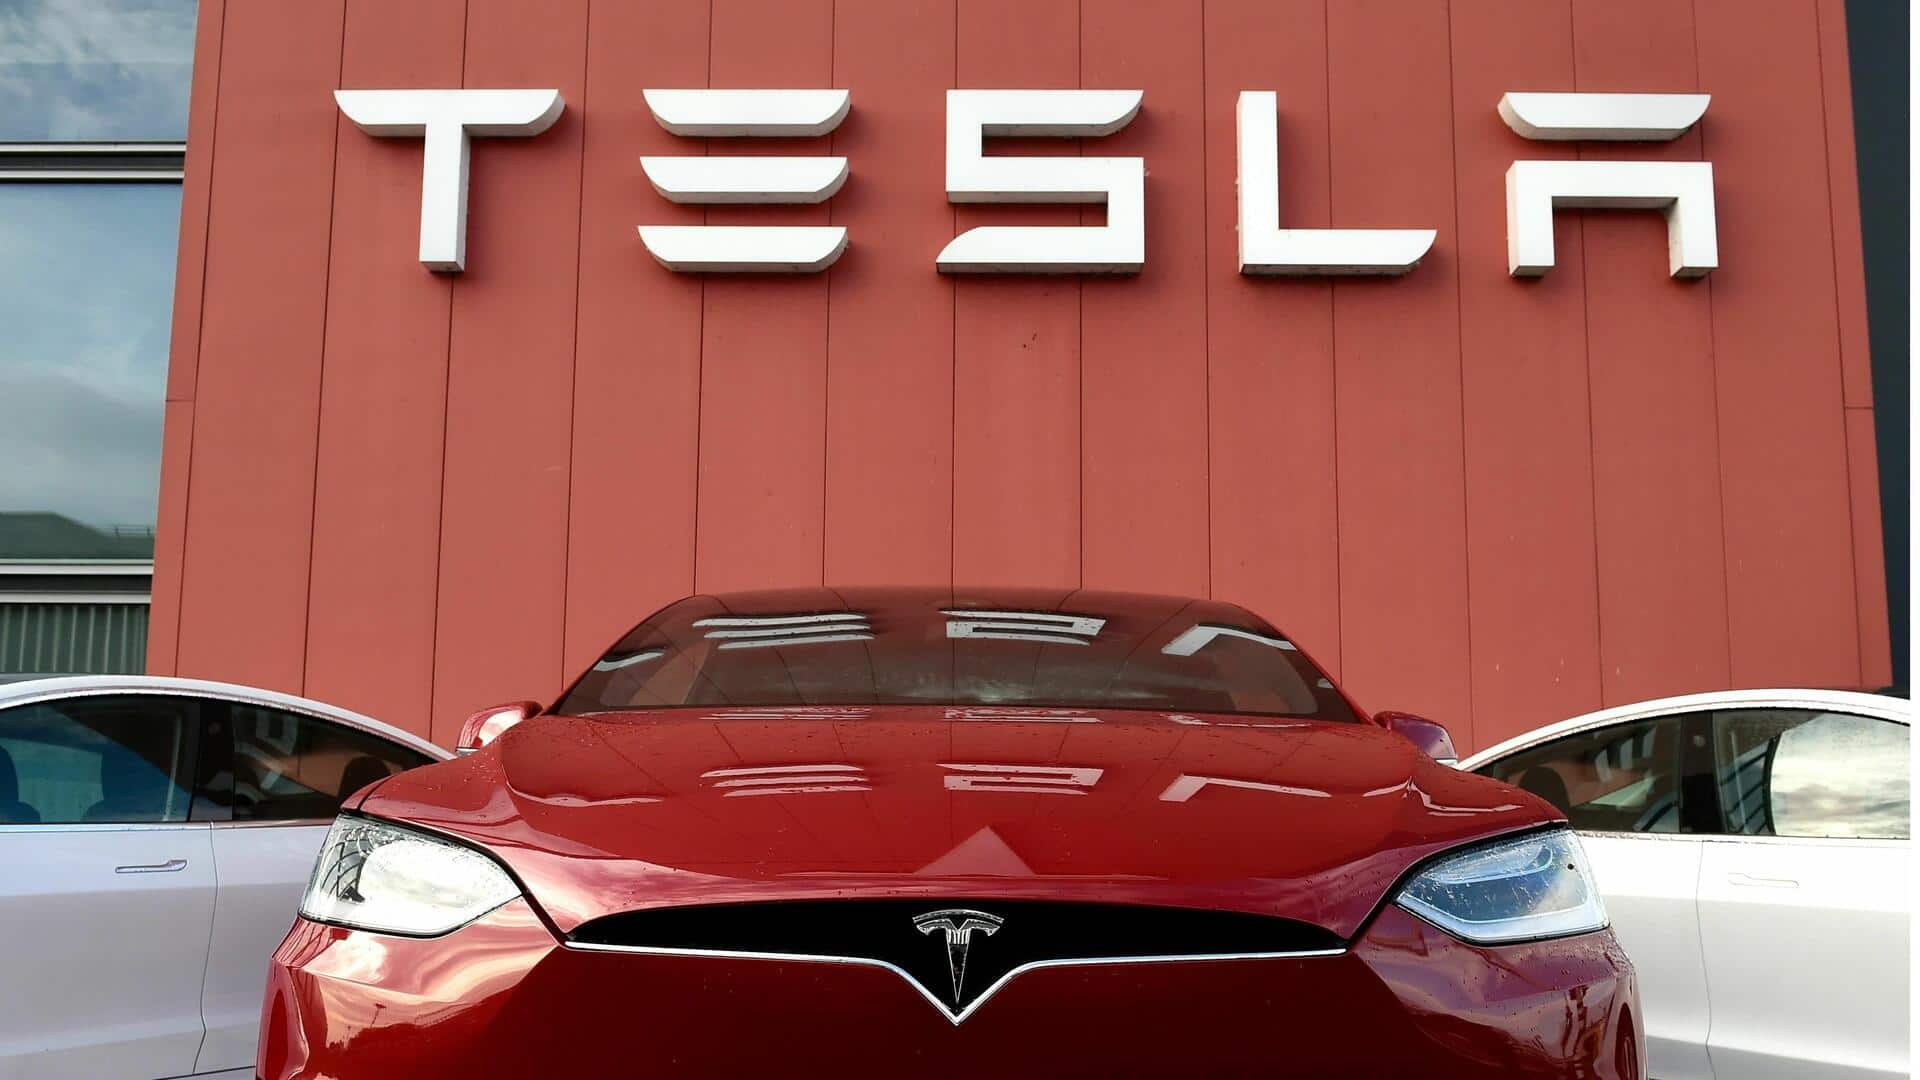 Clean cars, dirty secrets? Tesla faces child labor concerns